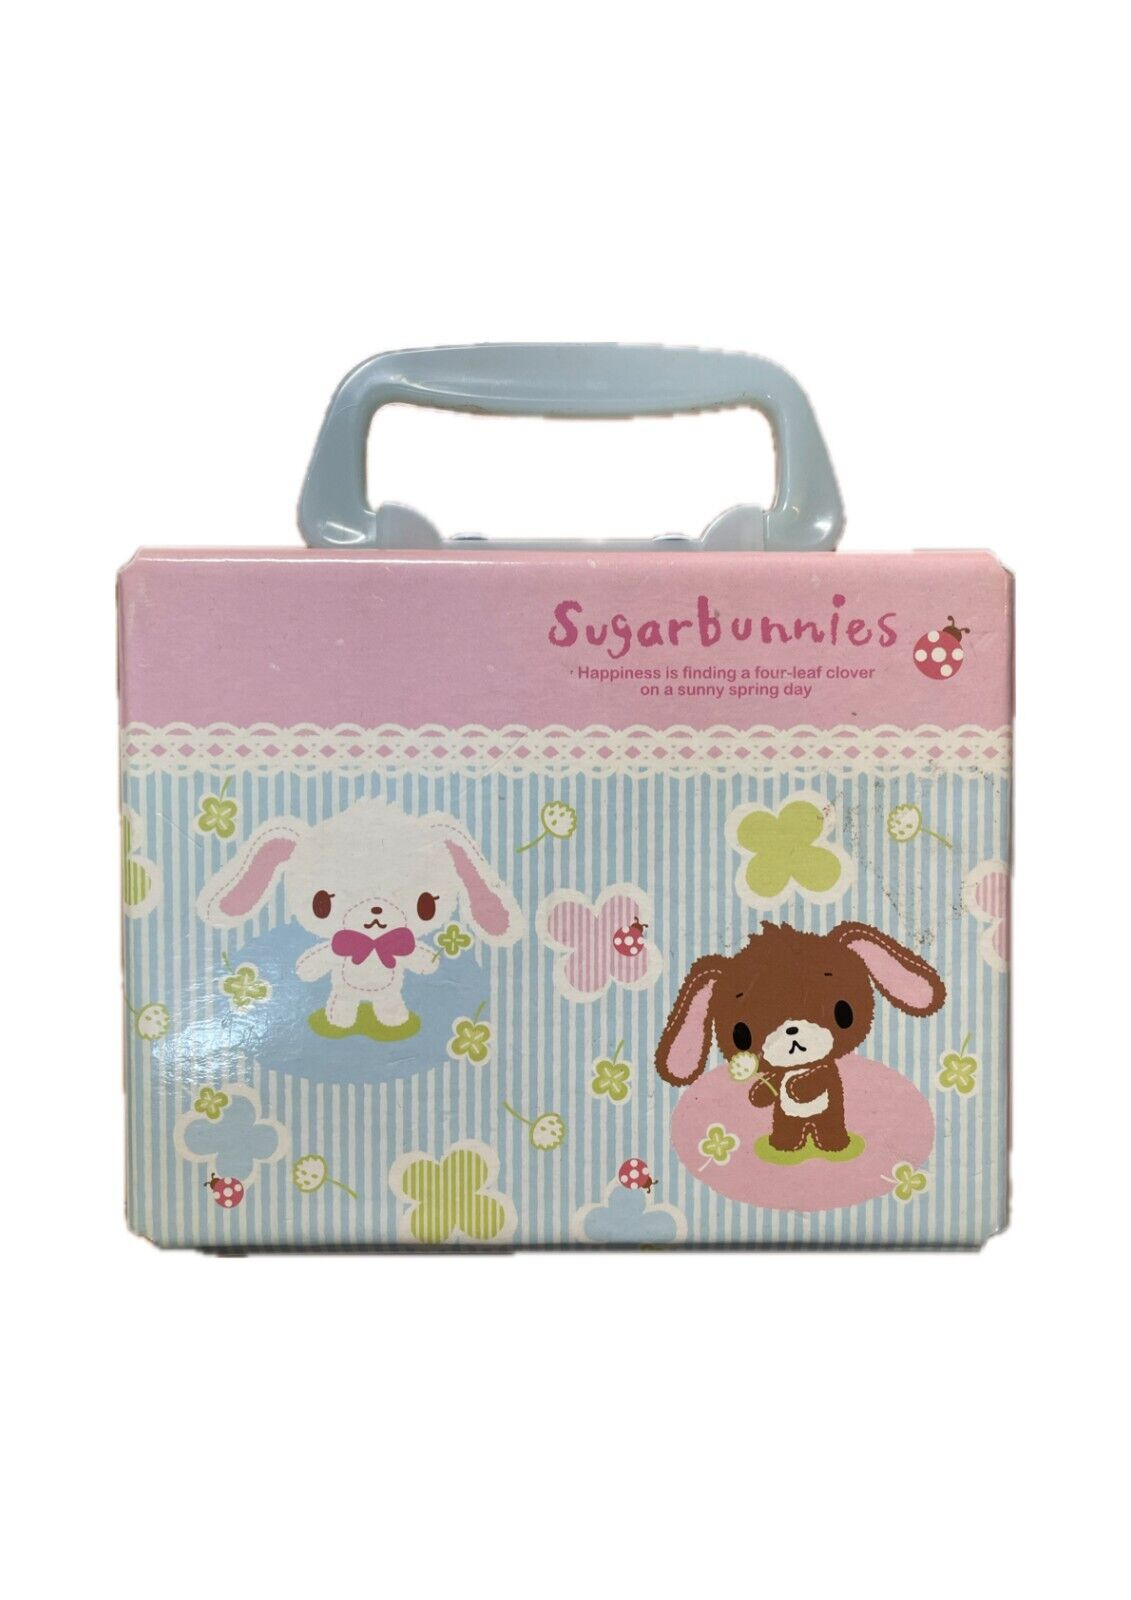 ◇◆Discontinued Item◆◇ Sanrio SugarBunnies Tool Box \